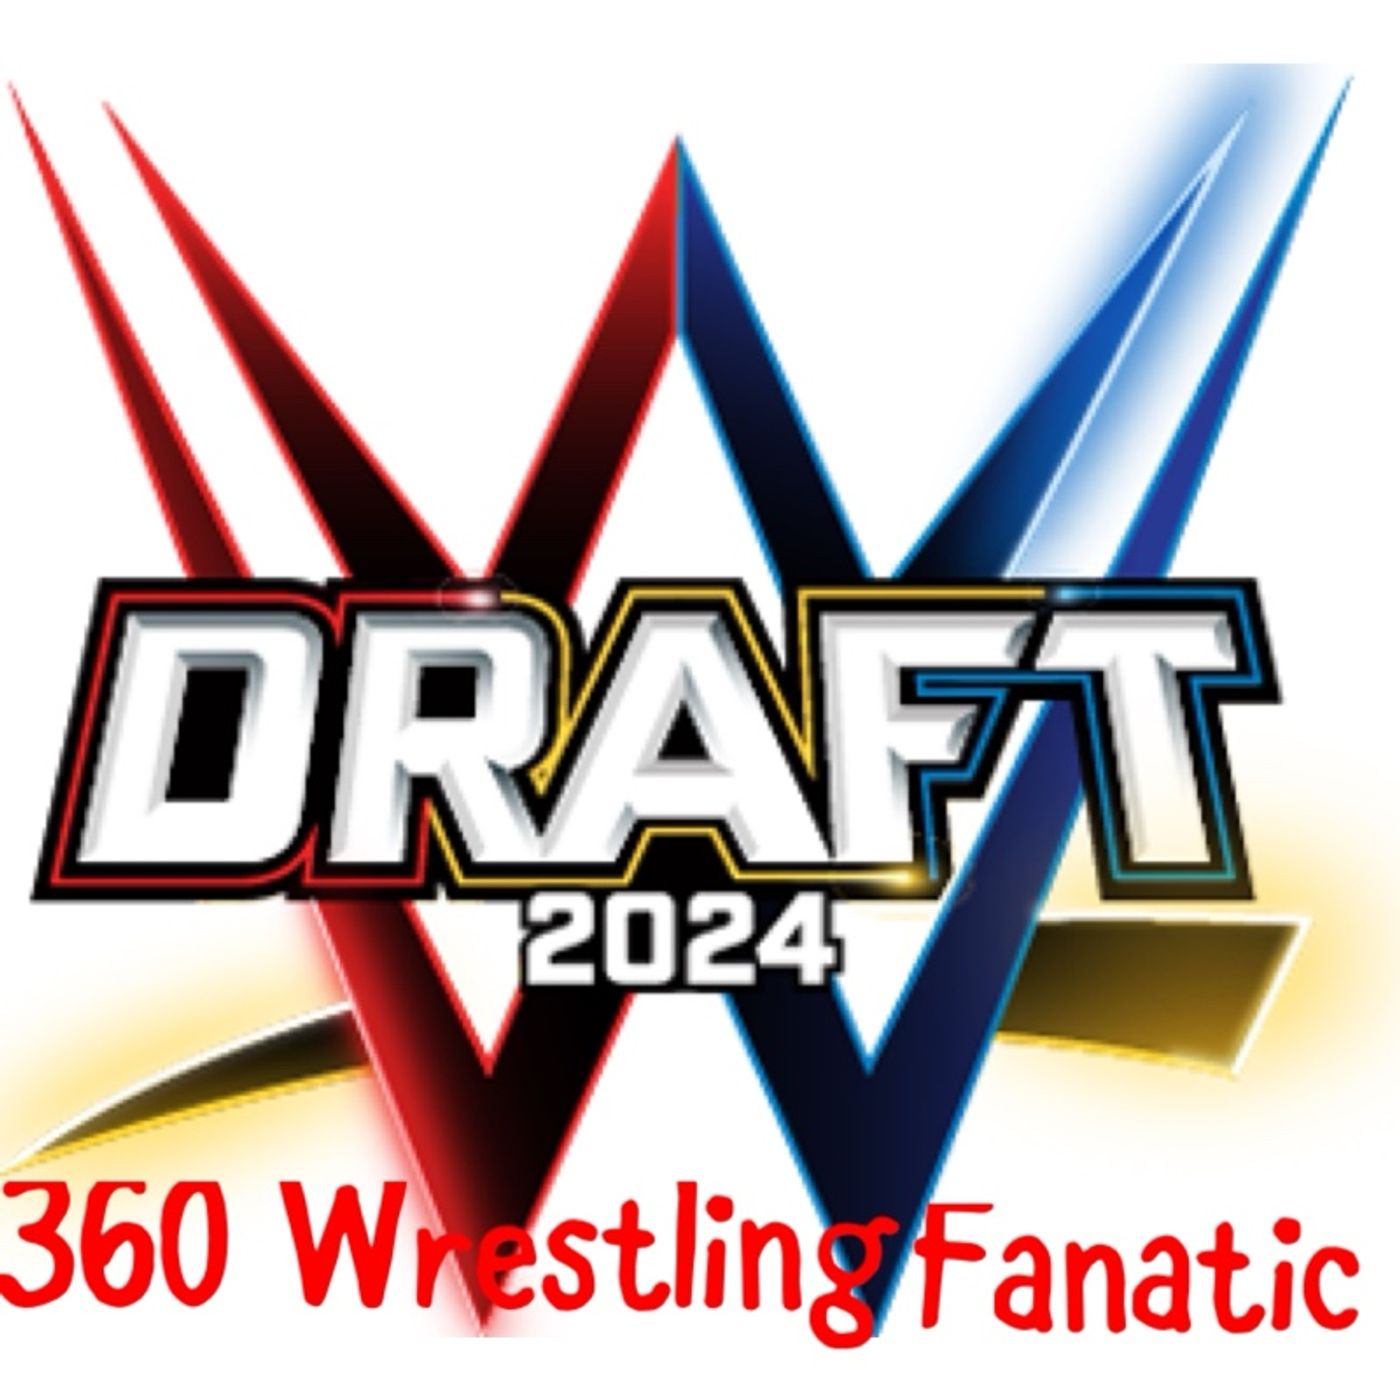 360 Wrestling Fanatic 594